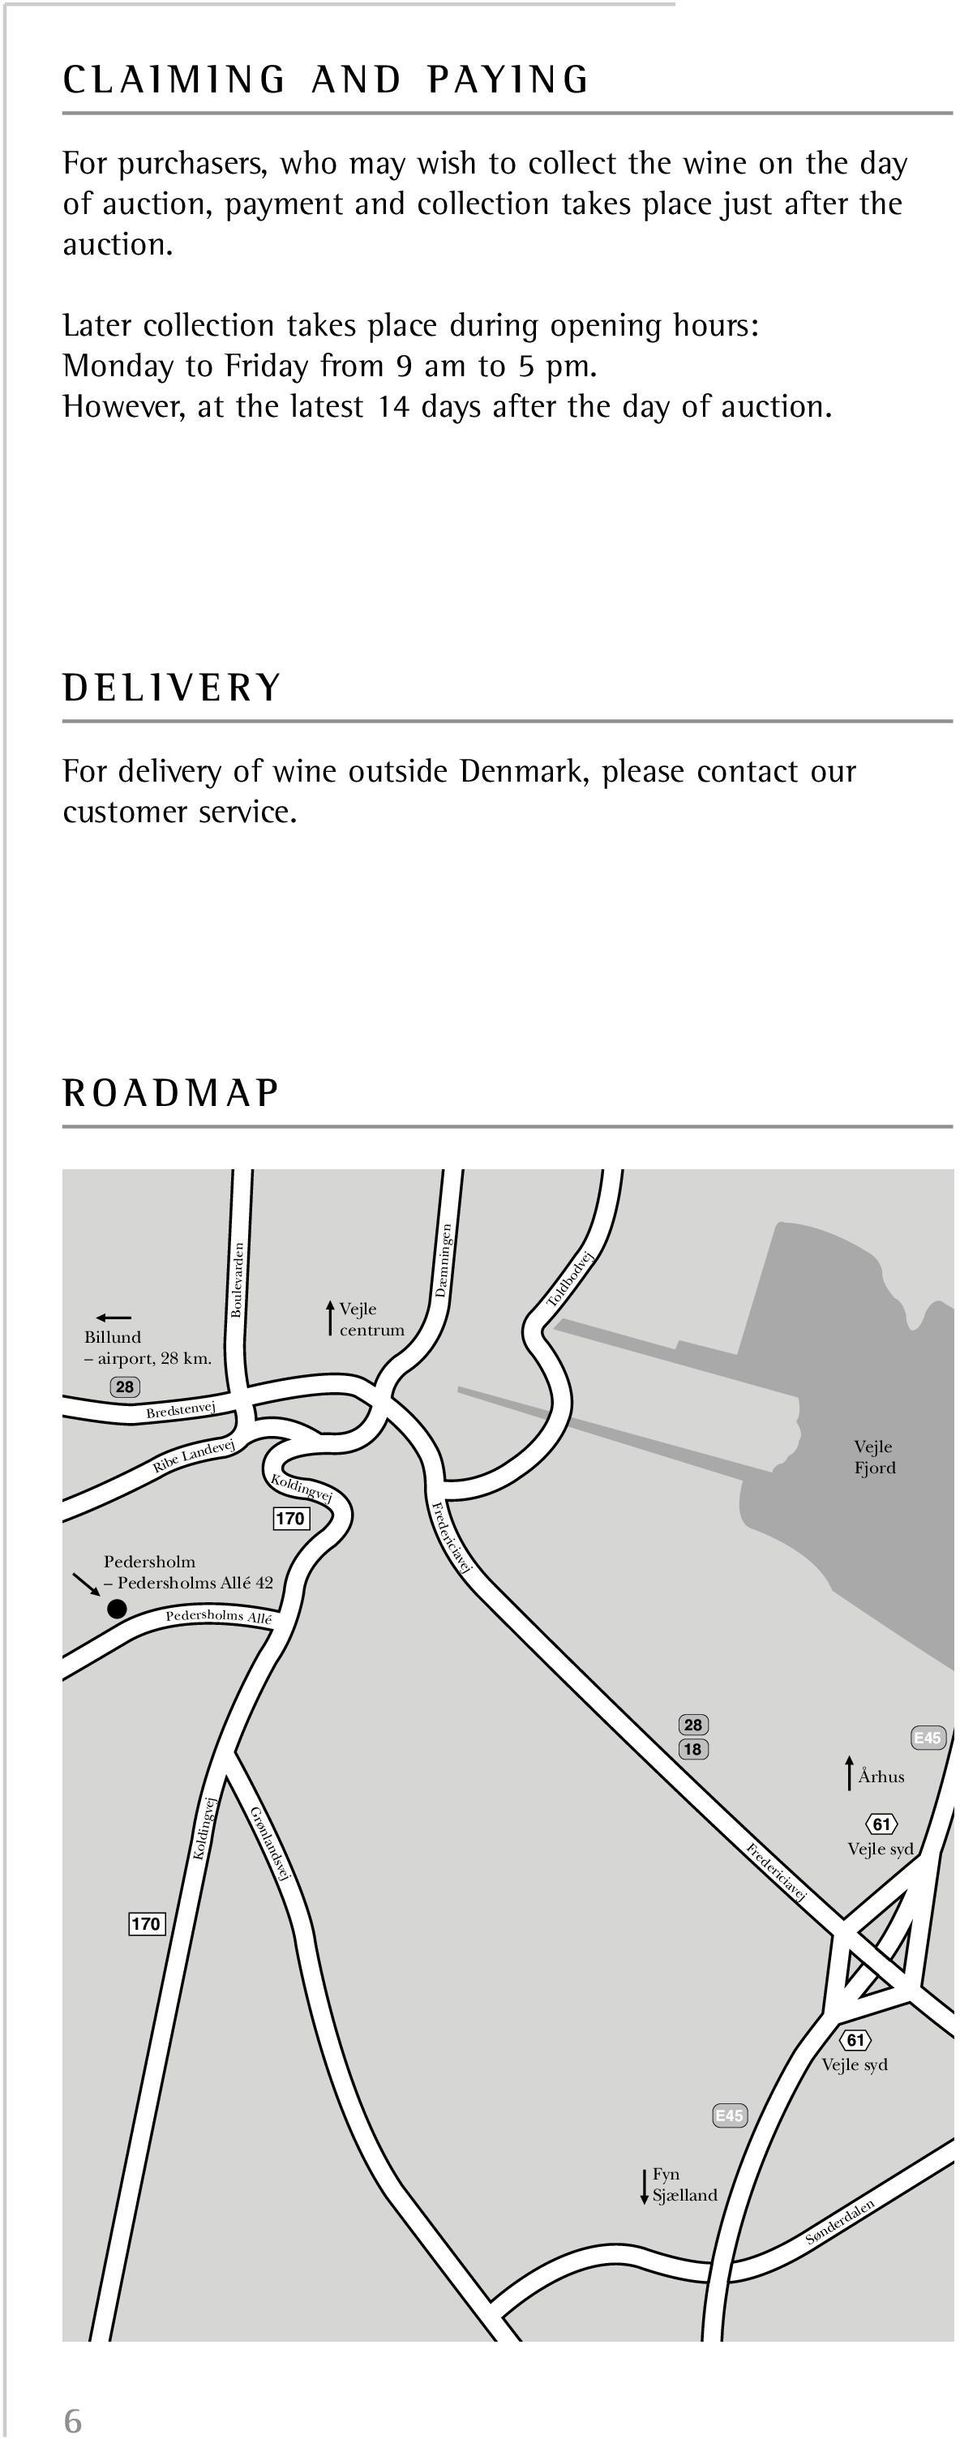 D E L I V E R Y For delivery of wine outside Denmark, please contact our customer service. R O A D M A P Billund airport, 28 km.